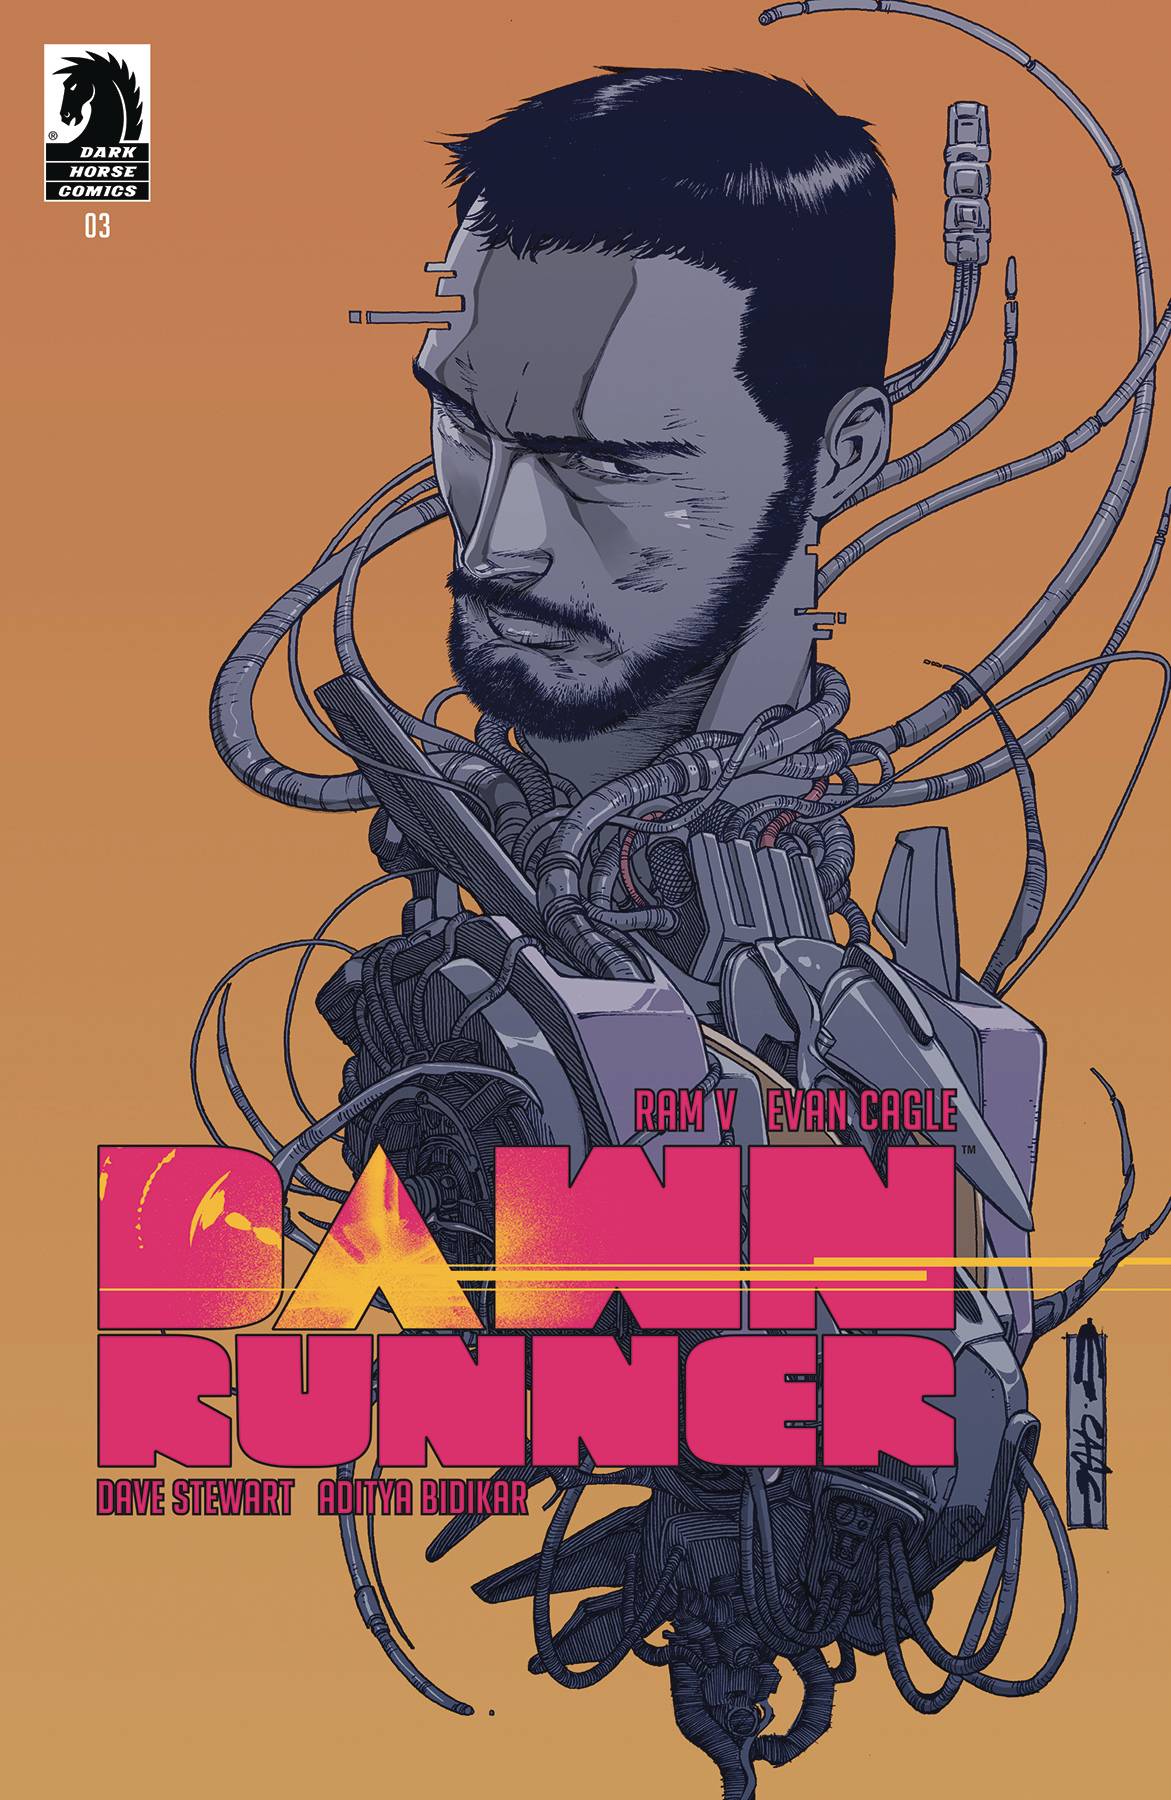 Dawnrunner #3 (Cover A) (Evan Cagle)